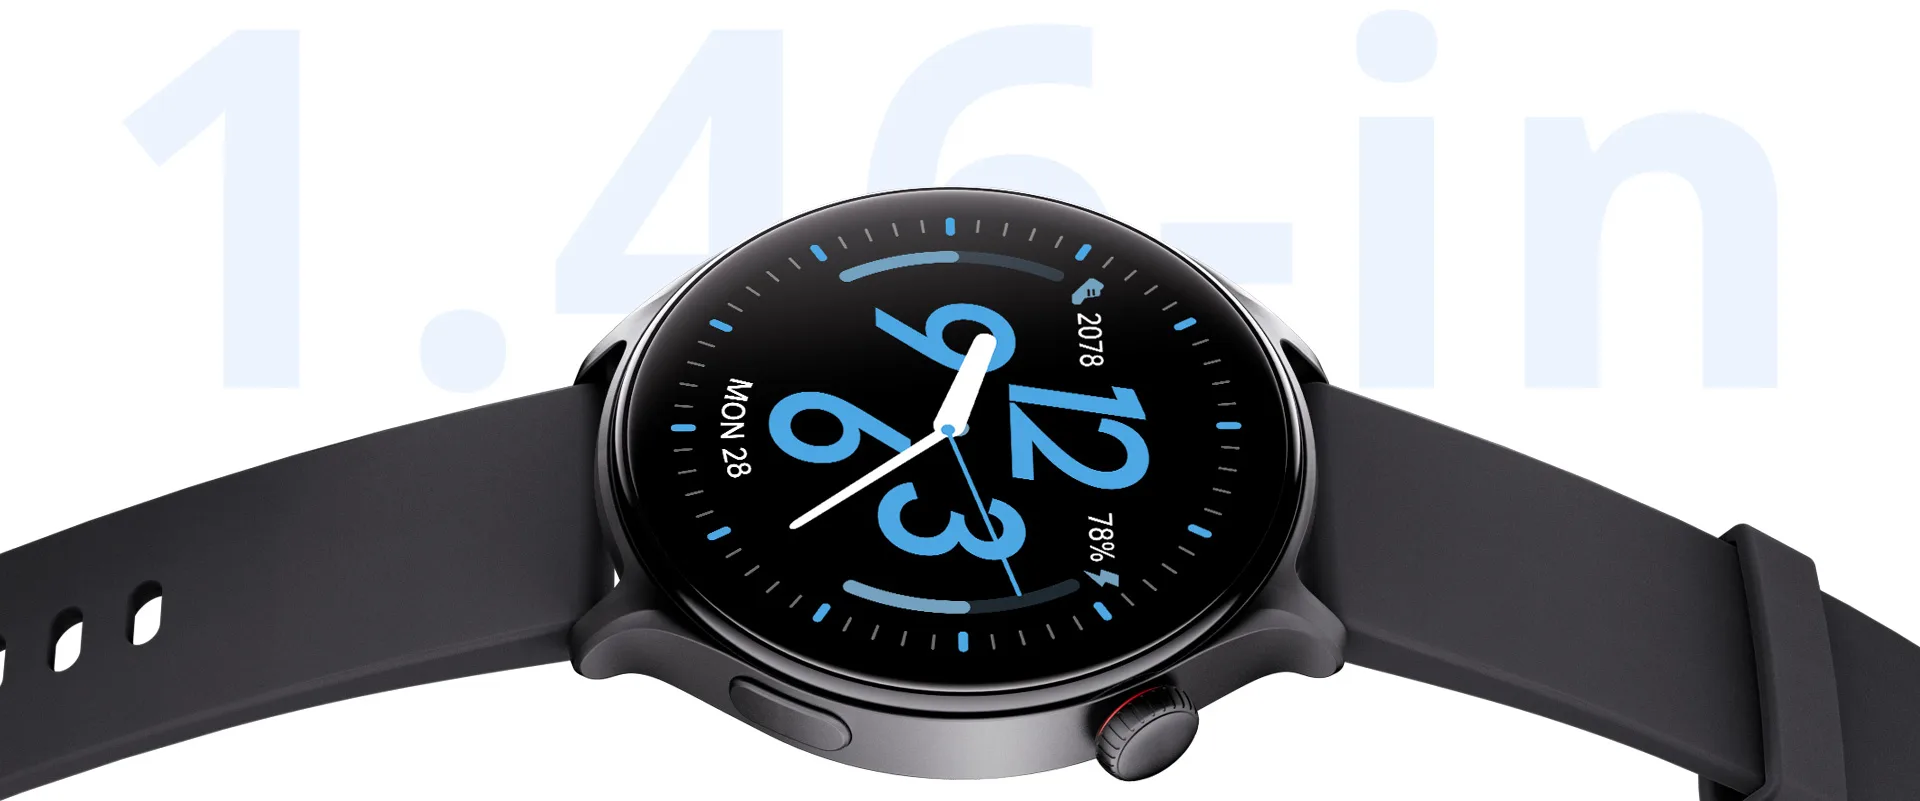 GTR2 Smart Watch with Bigger Screen -2